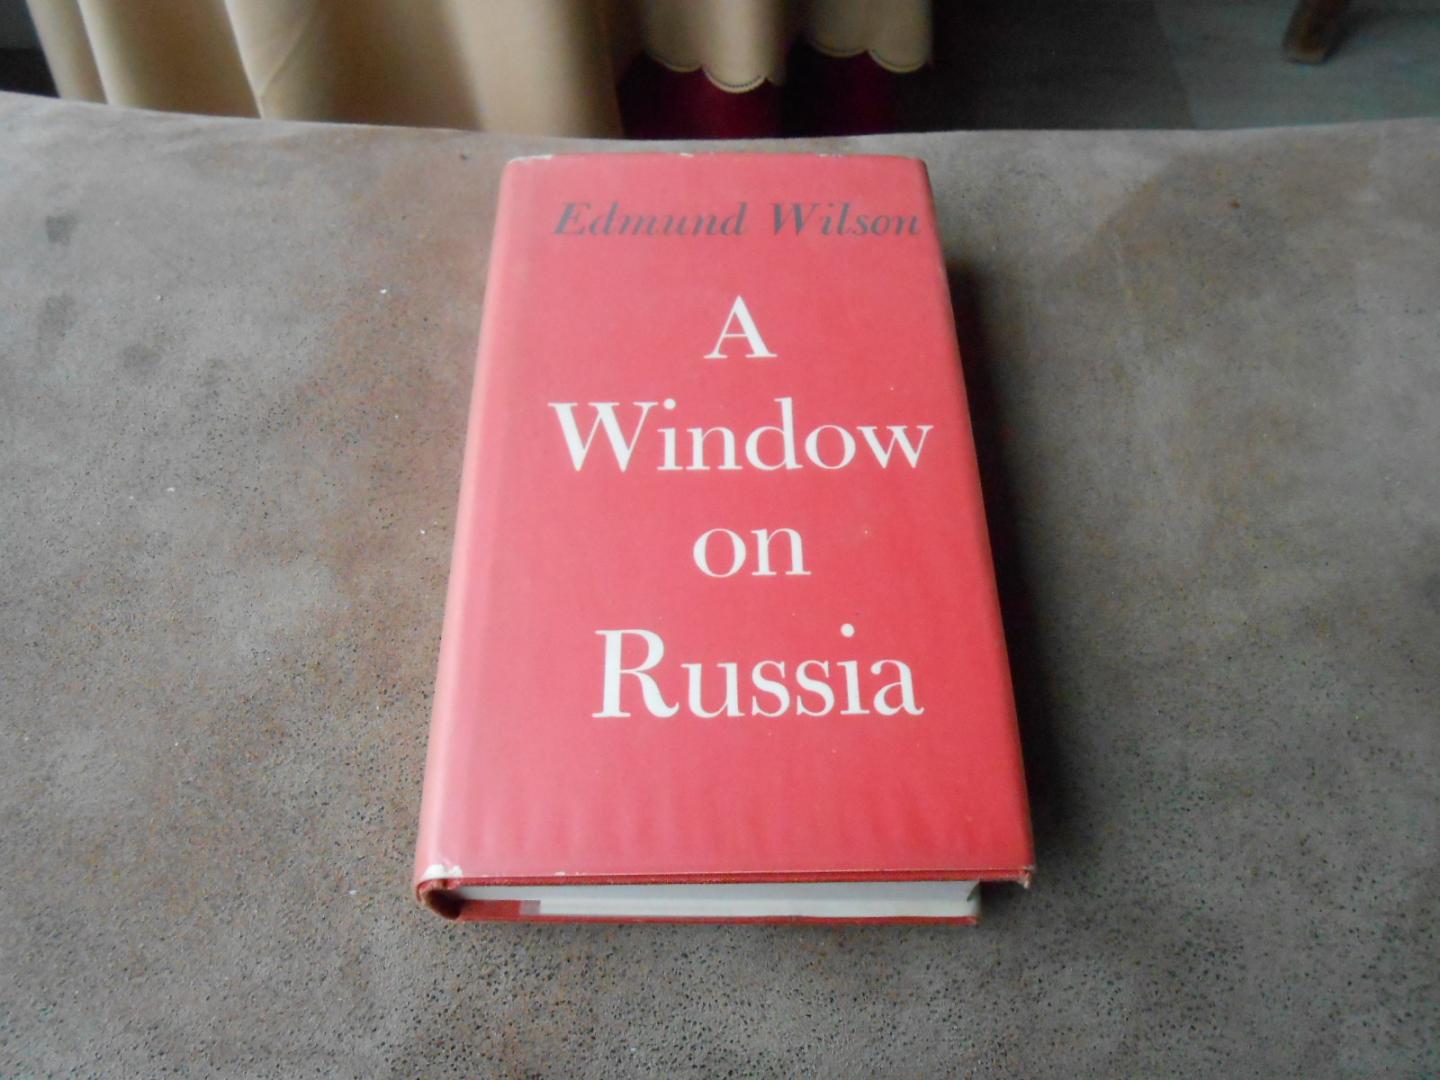 WILSON, EDMUND - A WINDOW ON RUSSIA